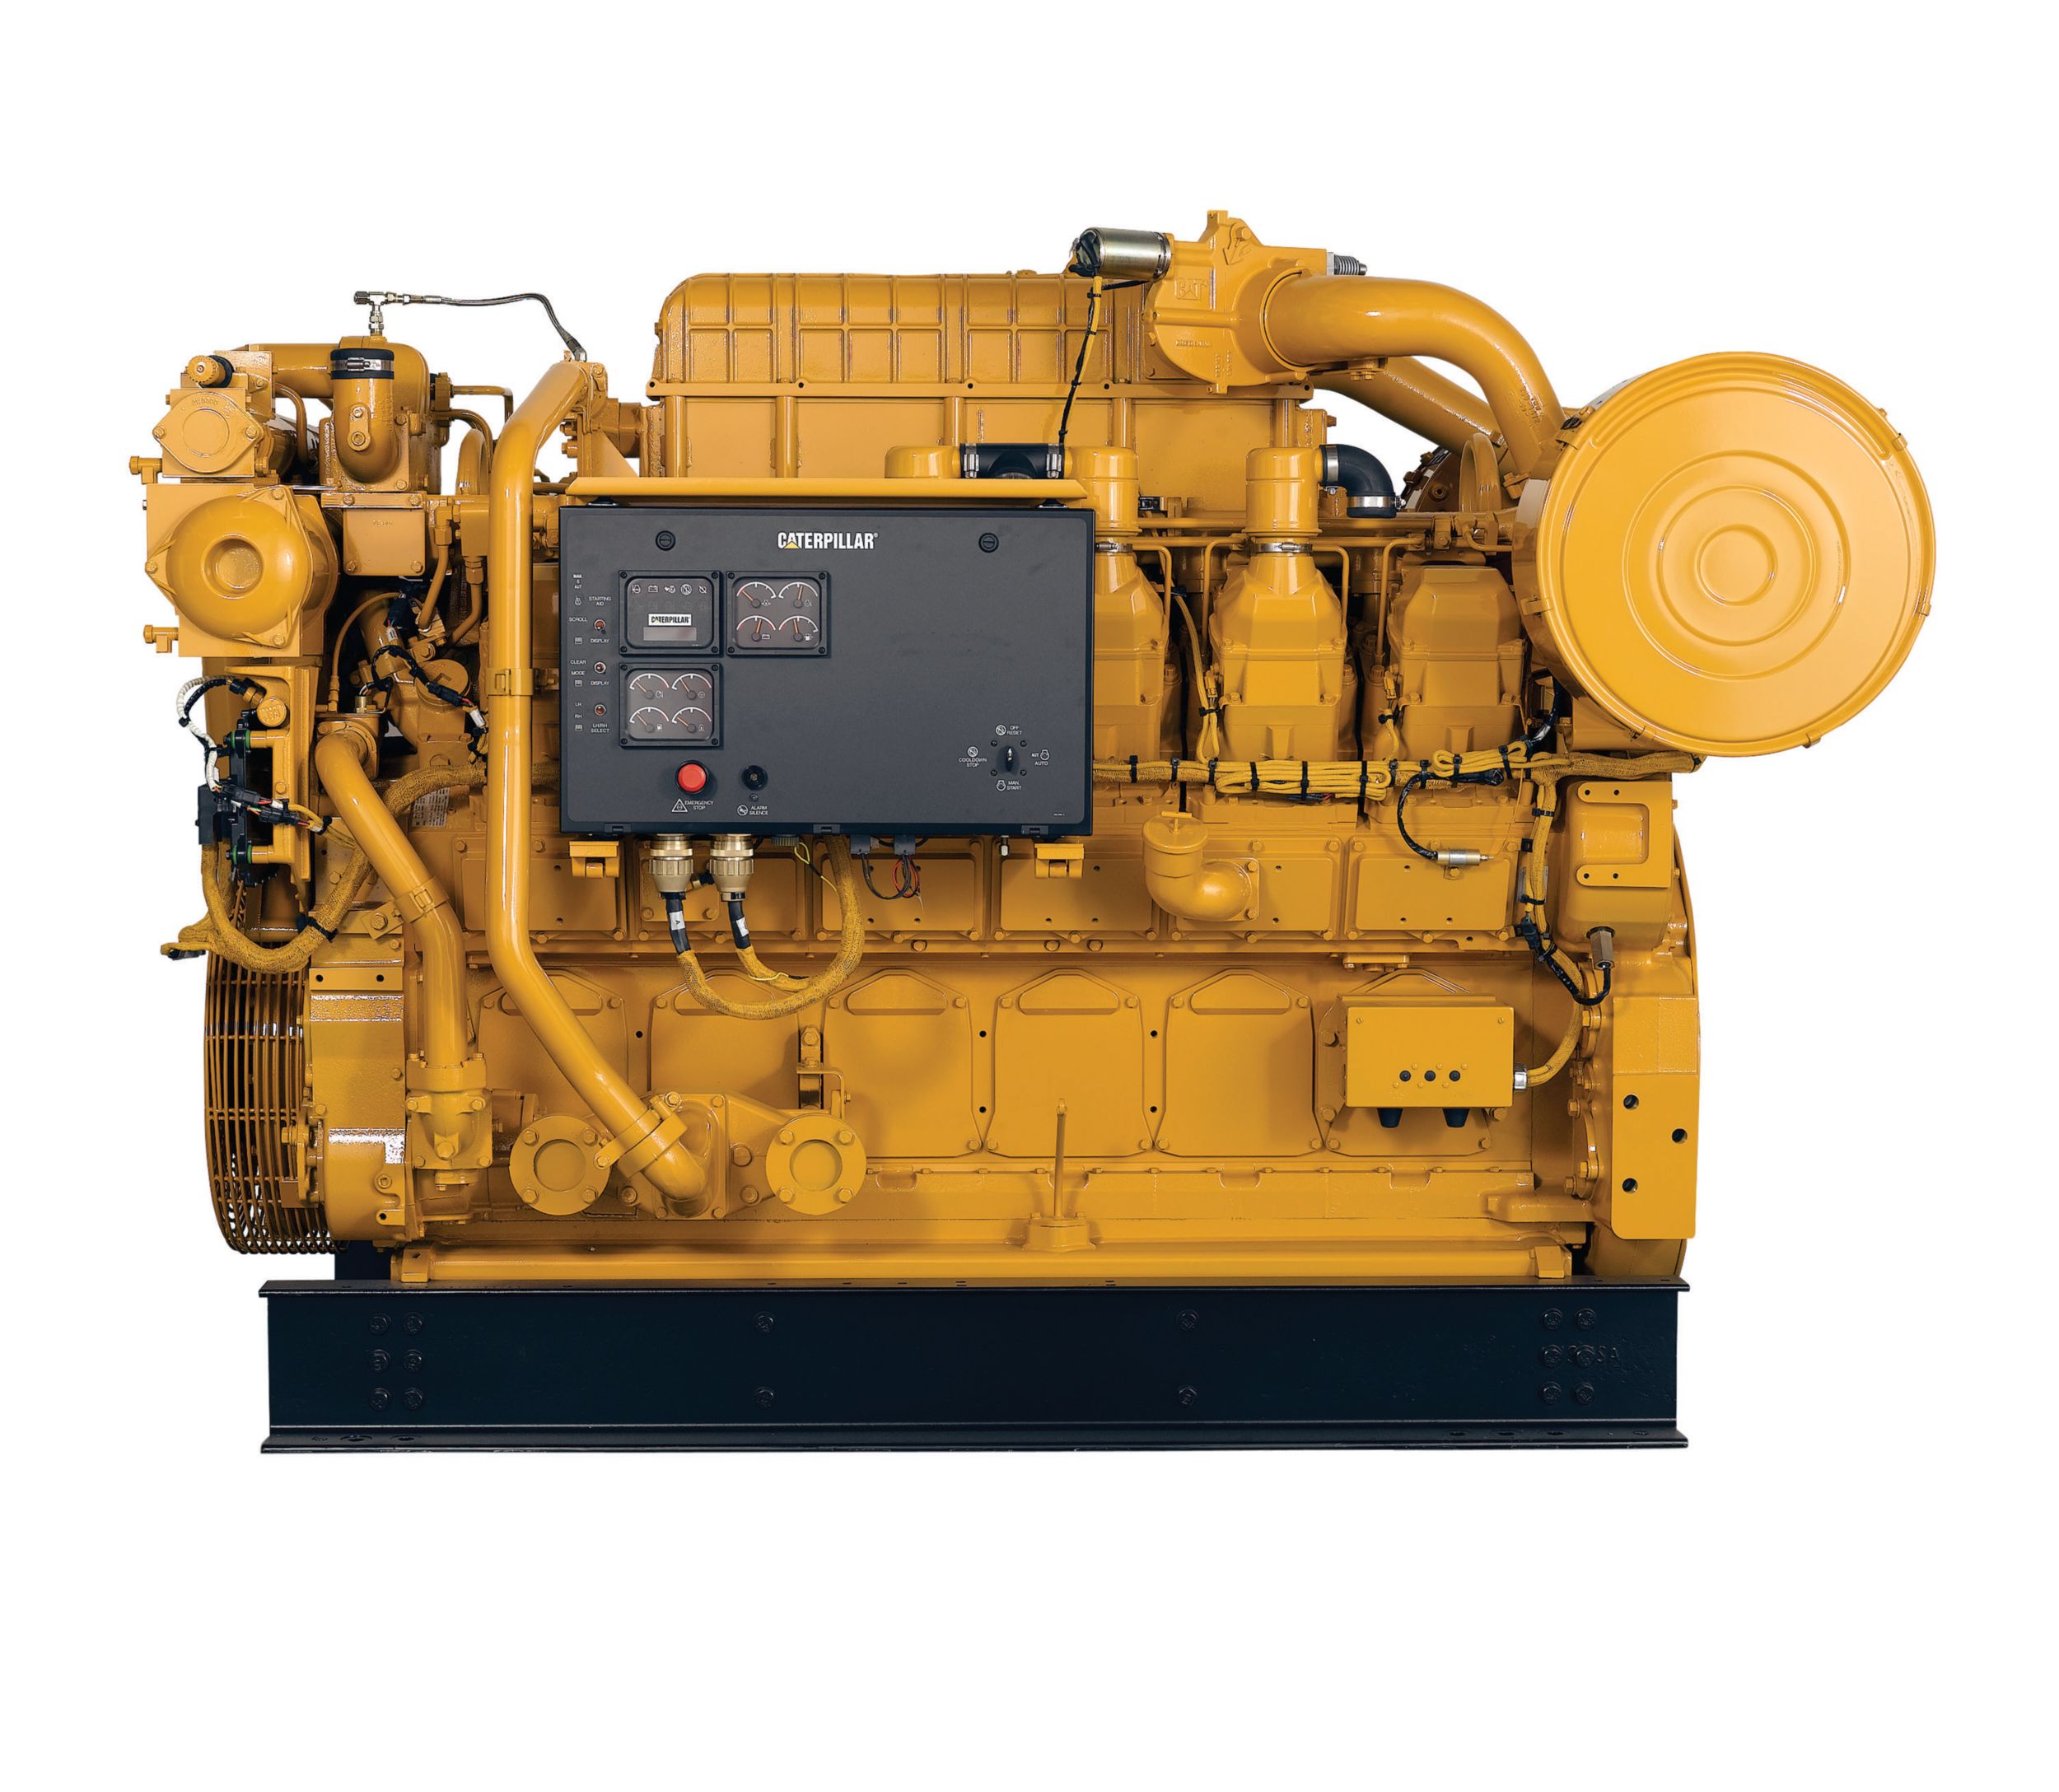 3512C (HD) Land Mechanical Drilling Engine